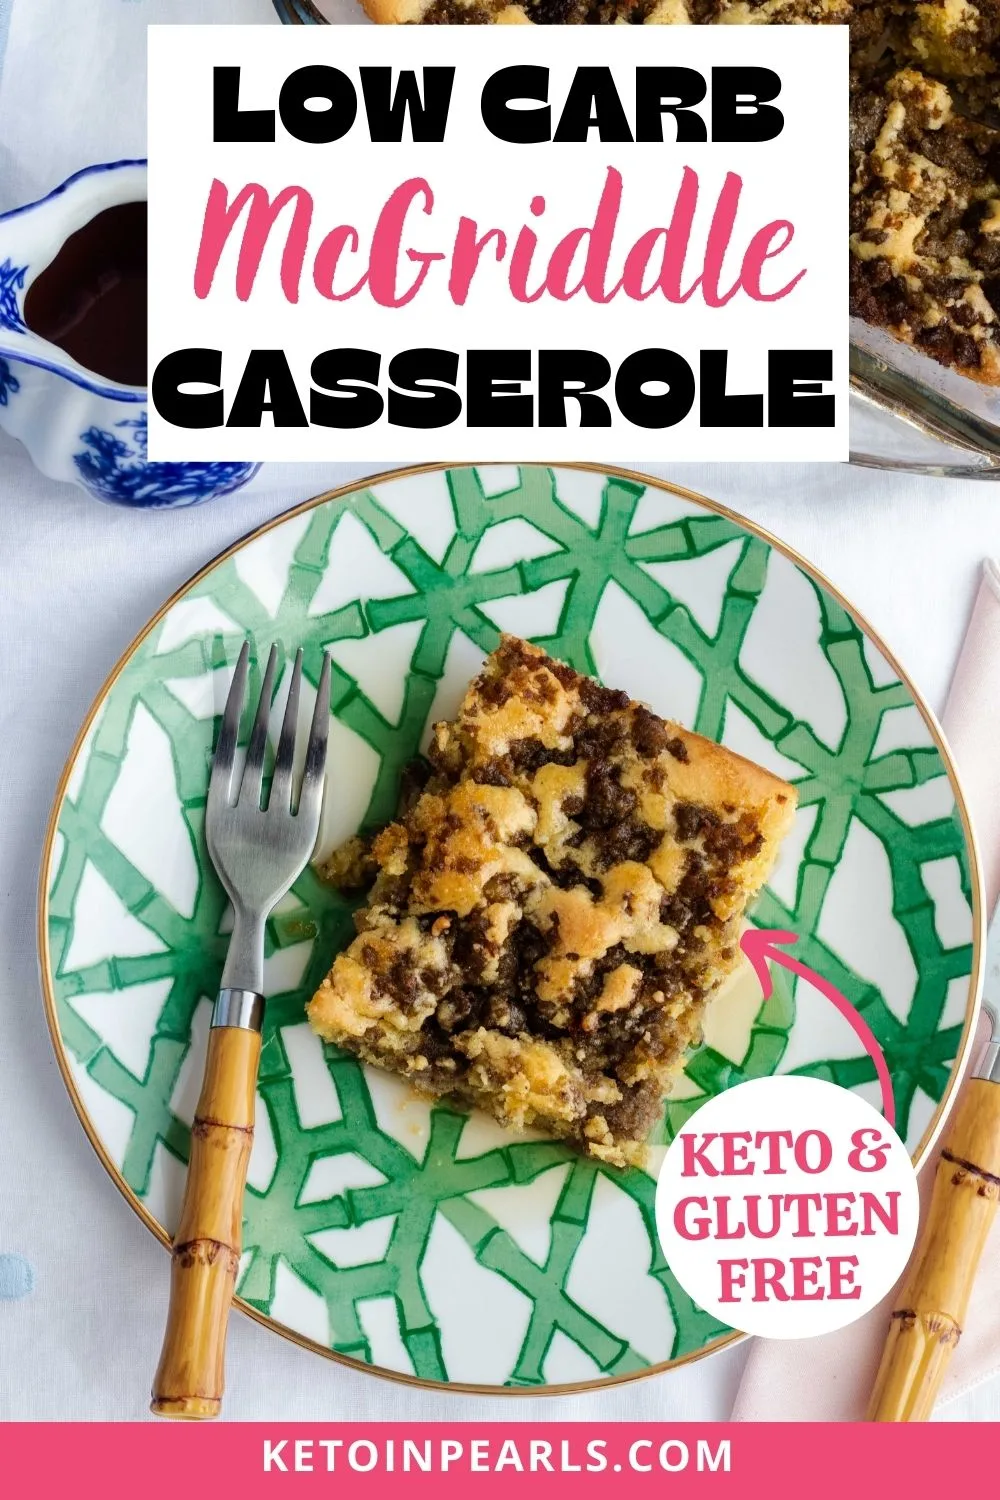 Low carb breakfast casserole- McDonald's copycat McGriddle. 4 net carbs.